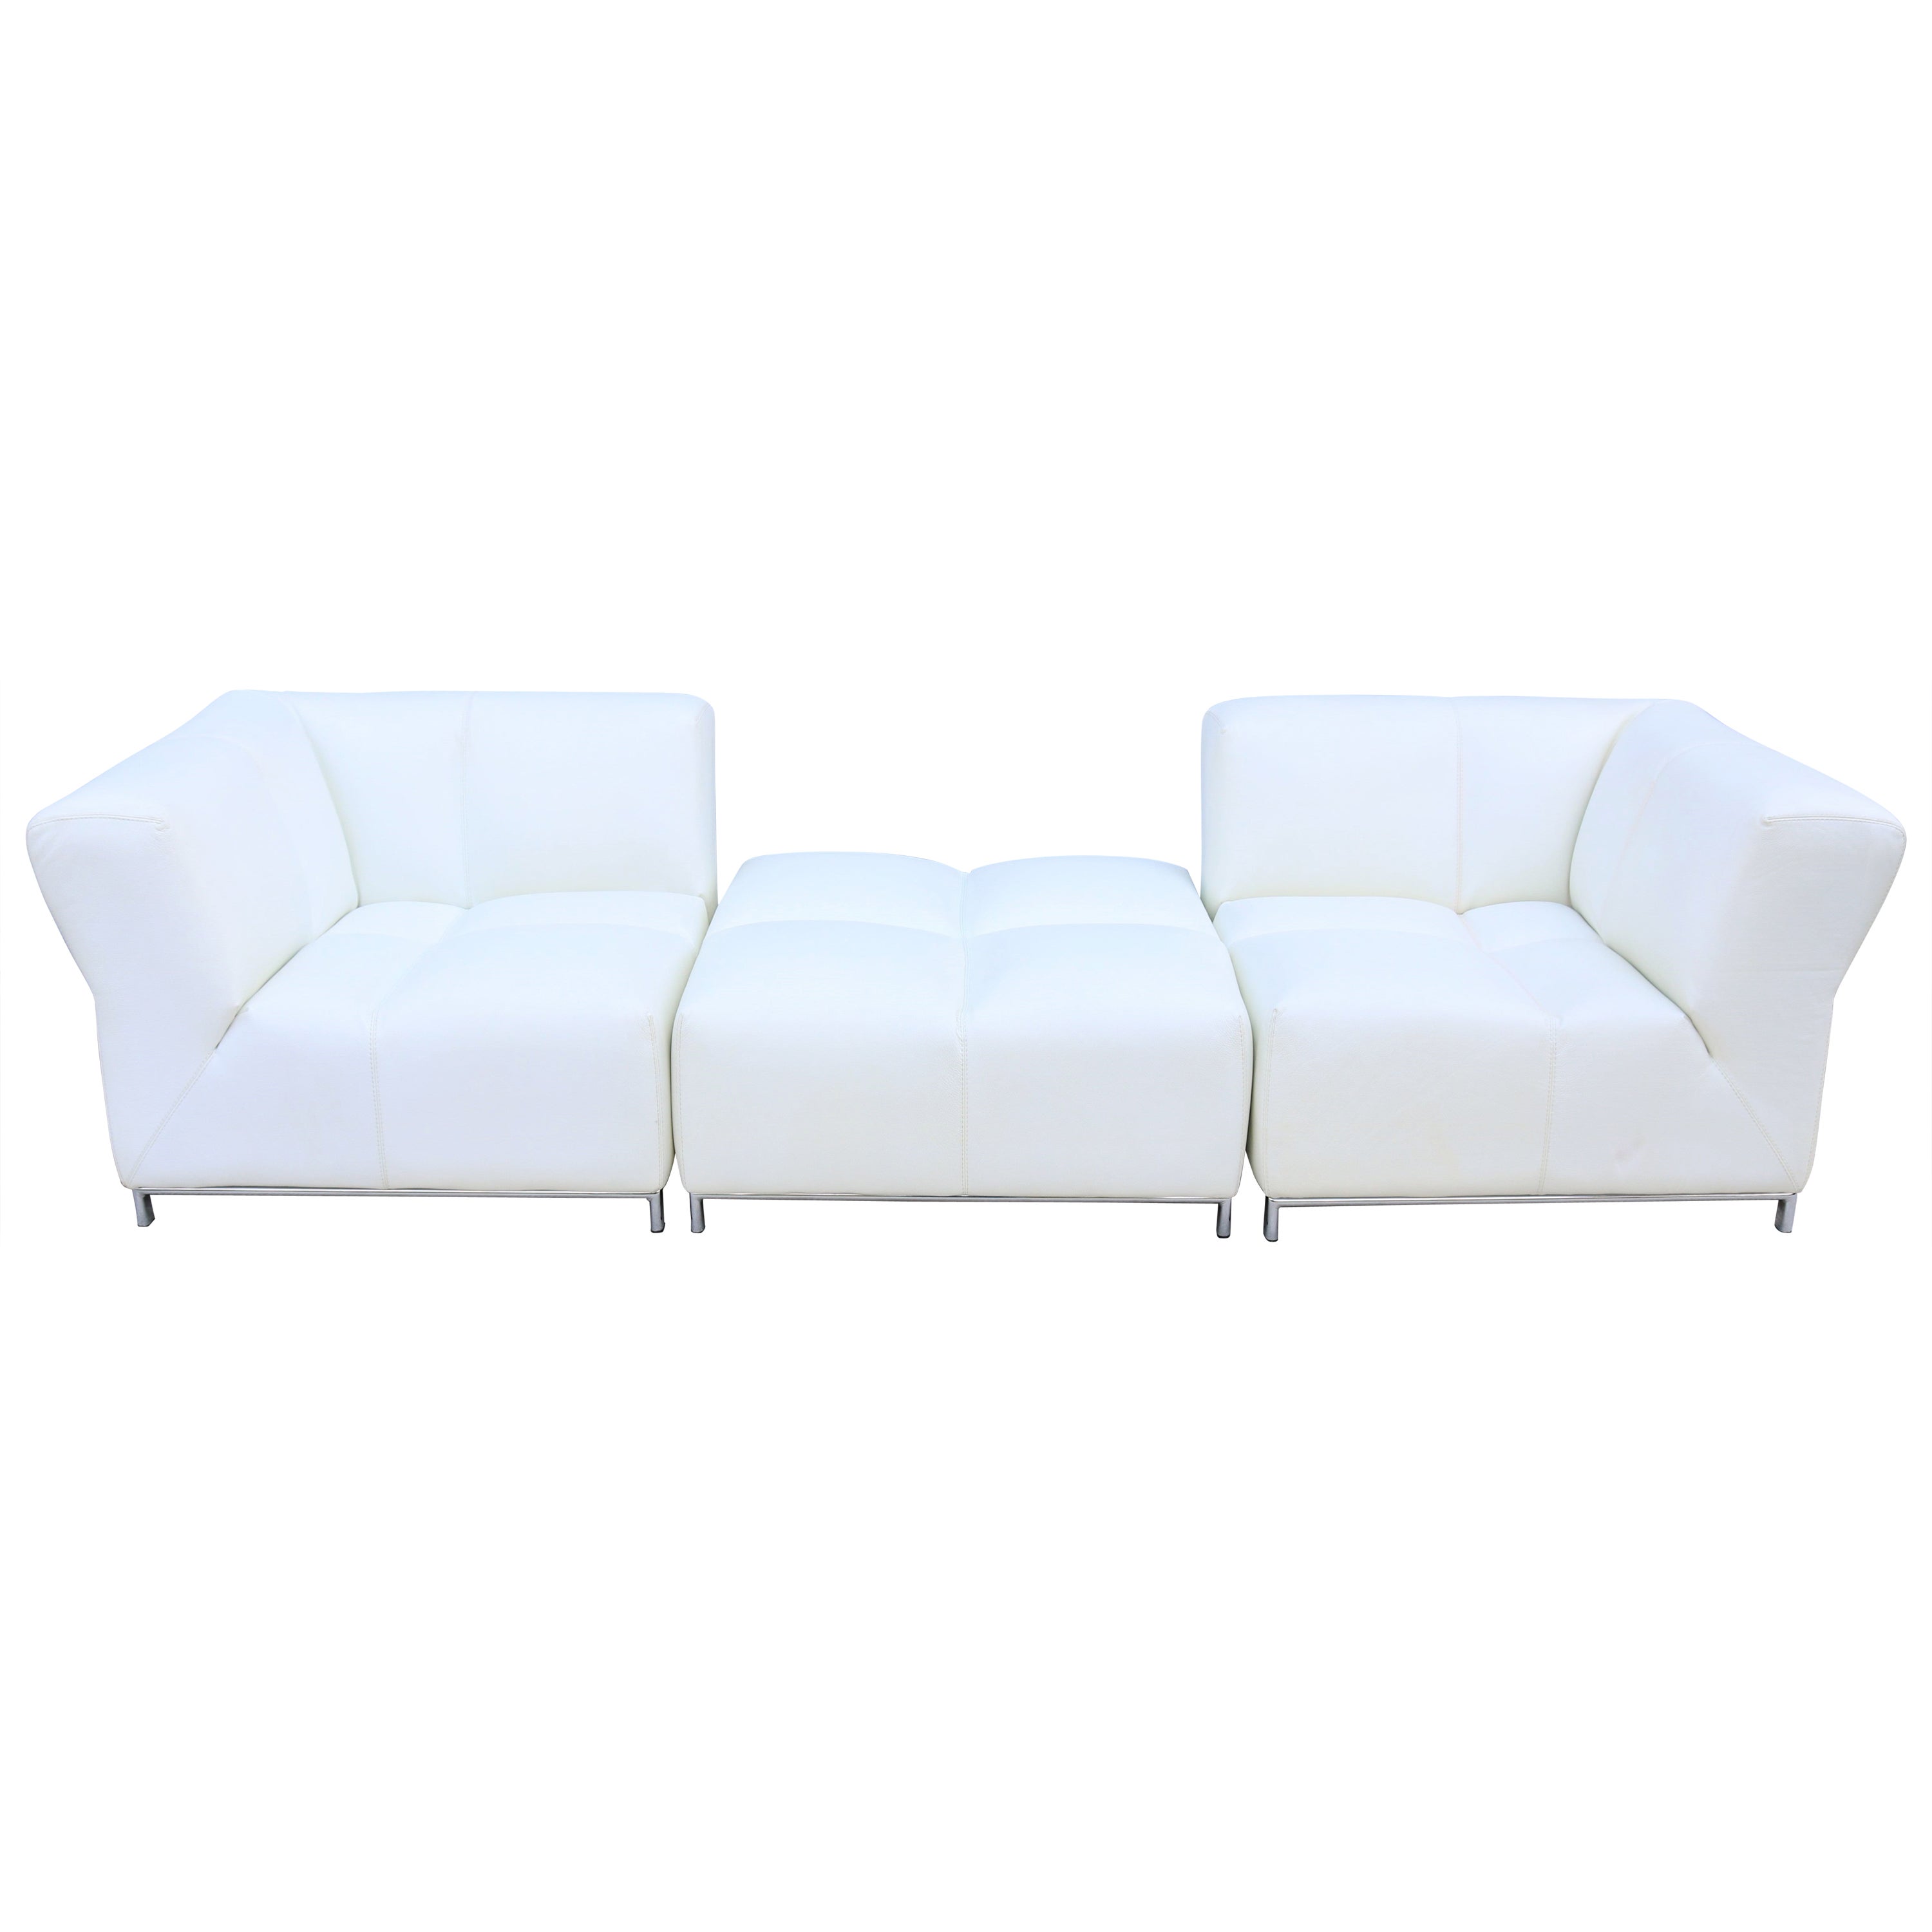 Italian Modern Domino Modular White Leather Sofa by Gamma Arredamenti